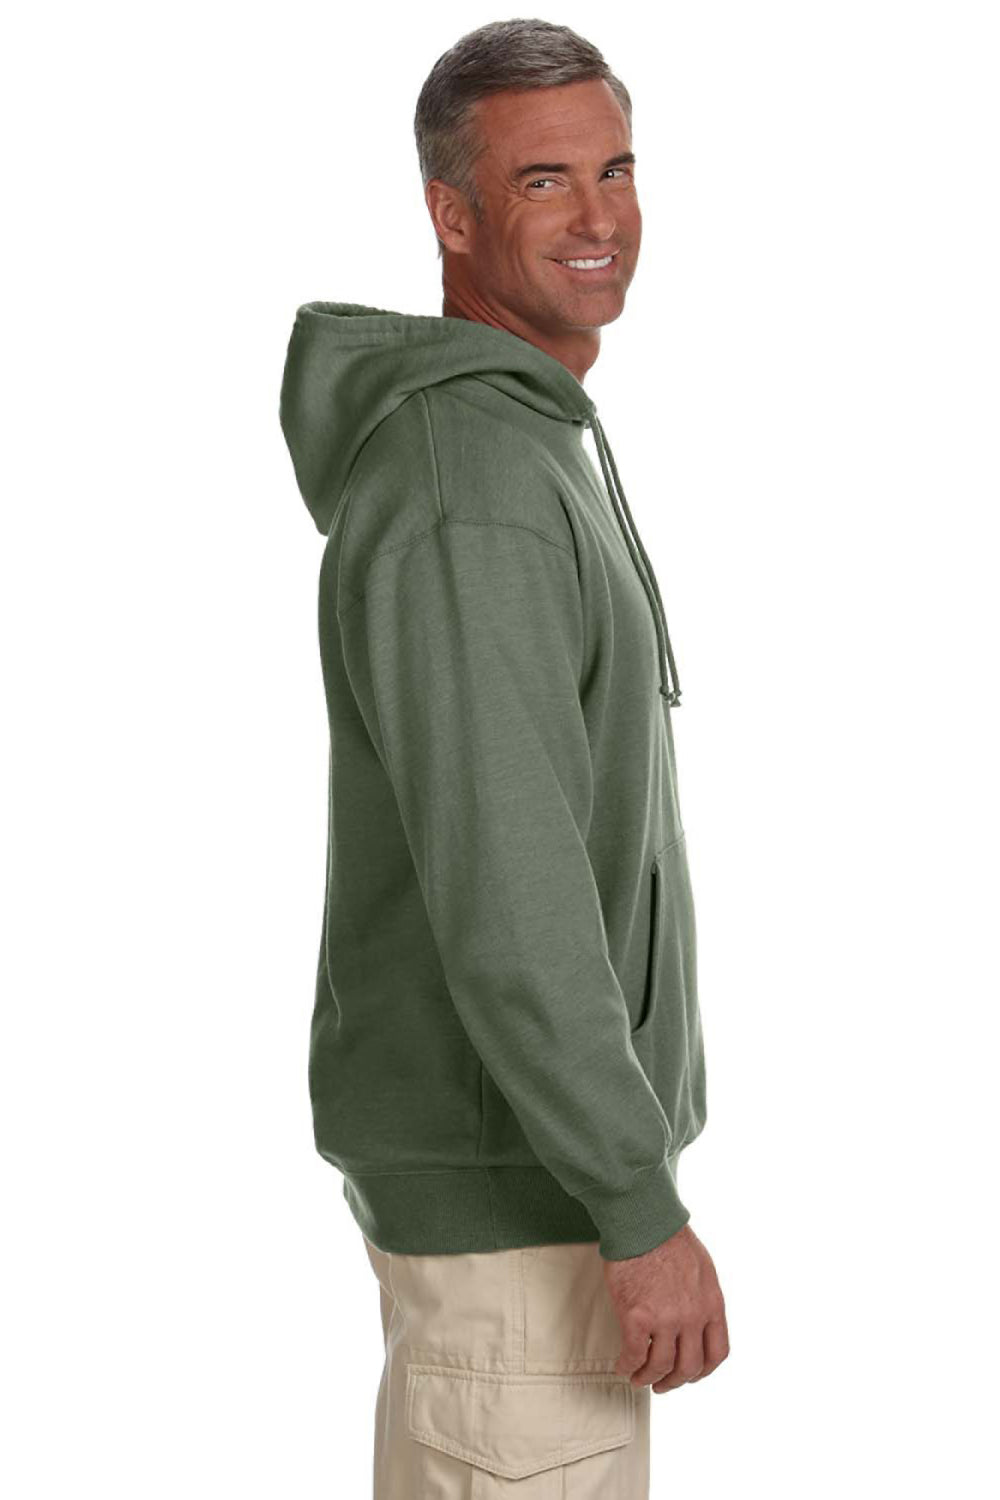 Econscious EC5570 Mens Heathered Fleece Hooded Sweatshirt Hoodie Military Green Side